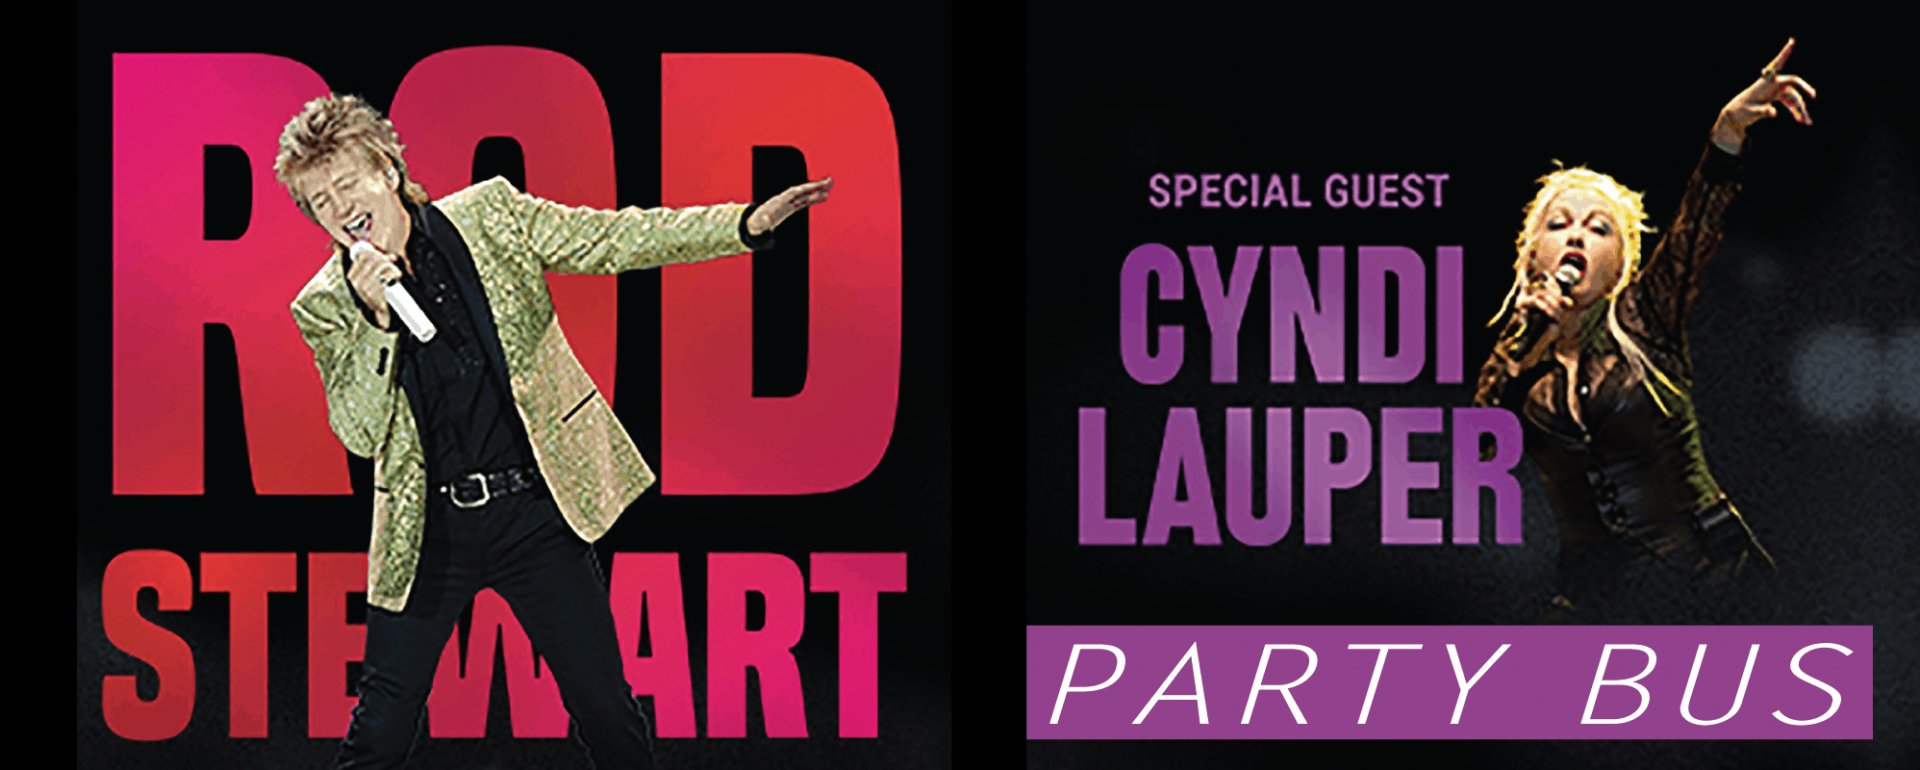 Rod Stewart and Cyndi Lauper Party Bus